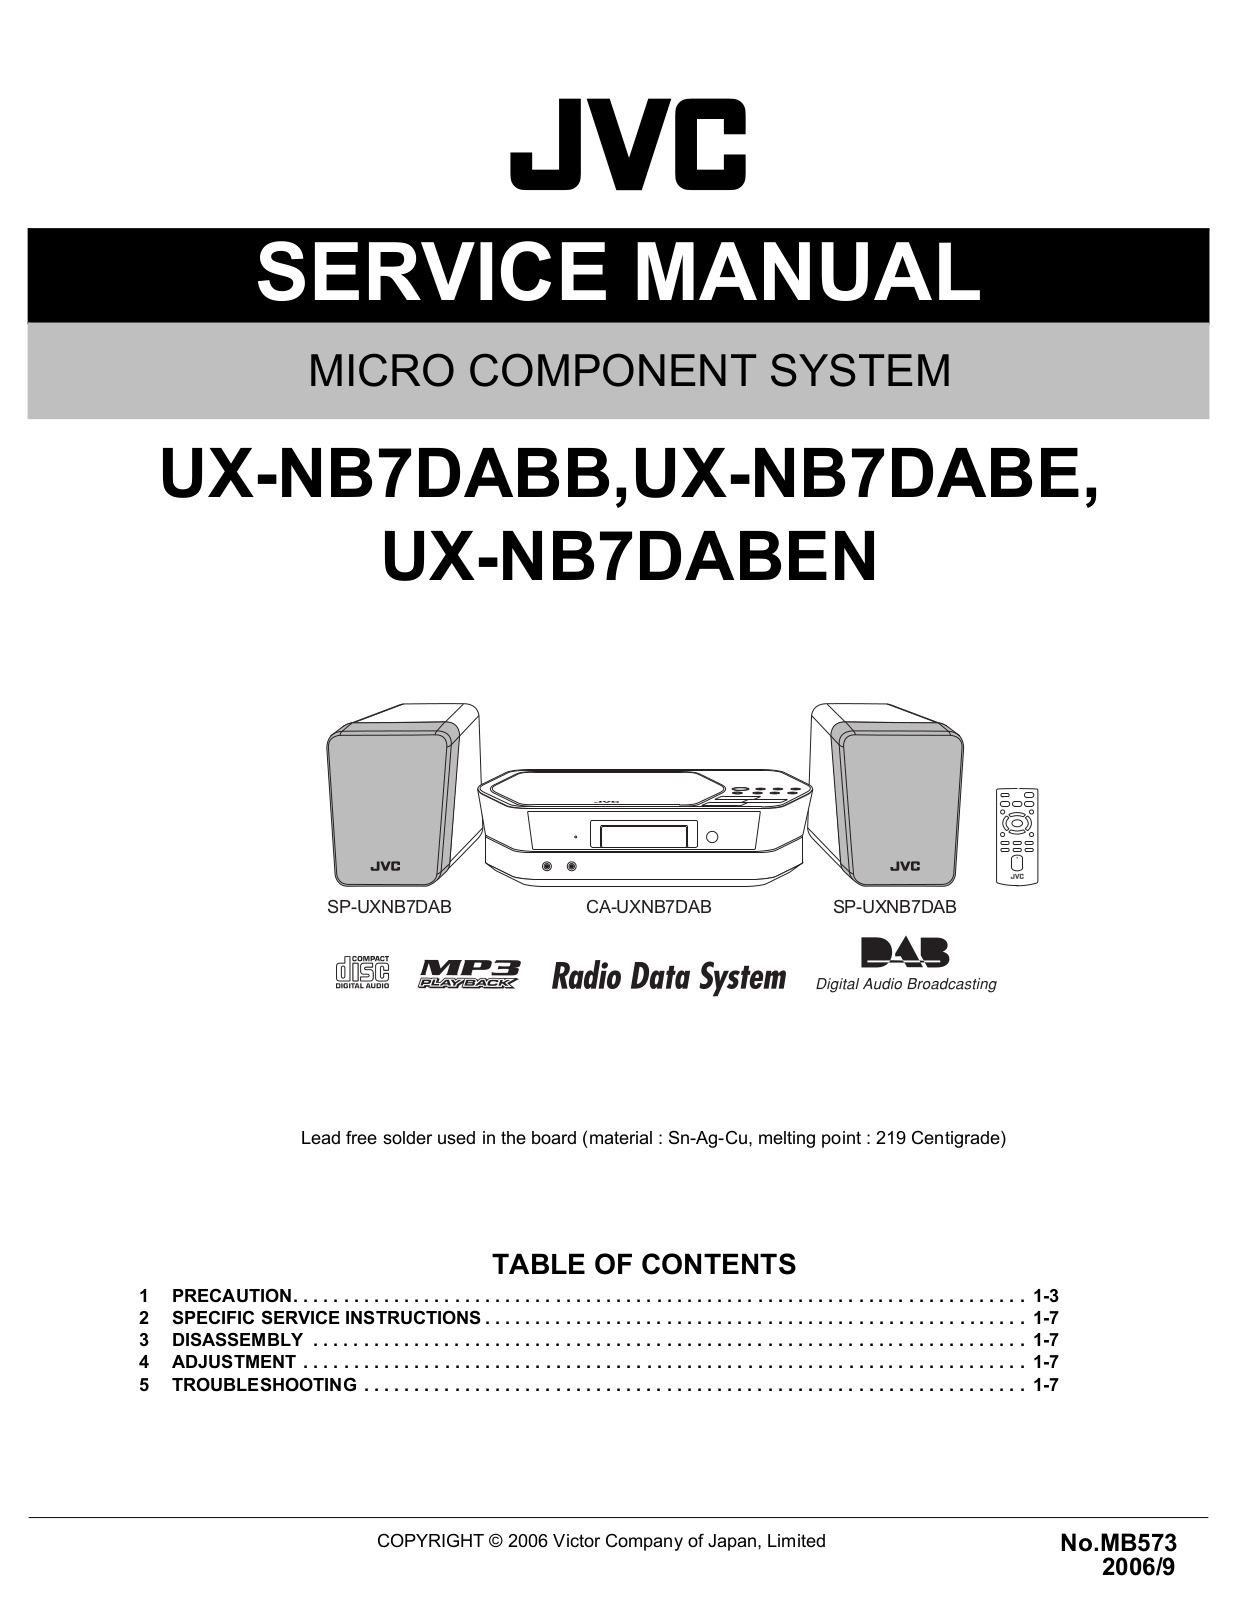 Jvc UX-NB7-DABB, UX-NB7-DABEN, UX-NB7-DABE Service Manual